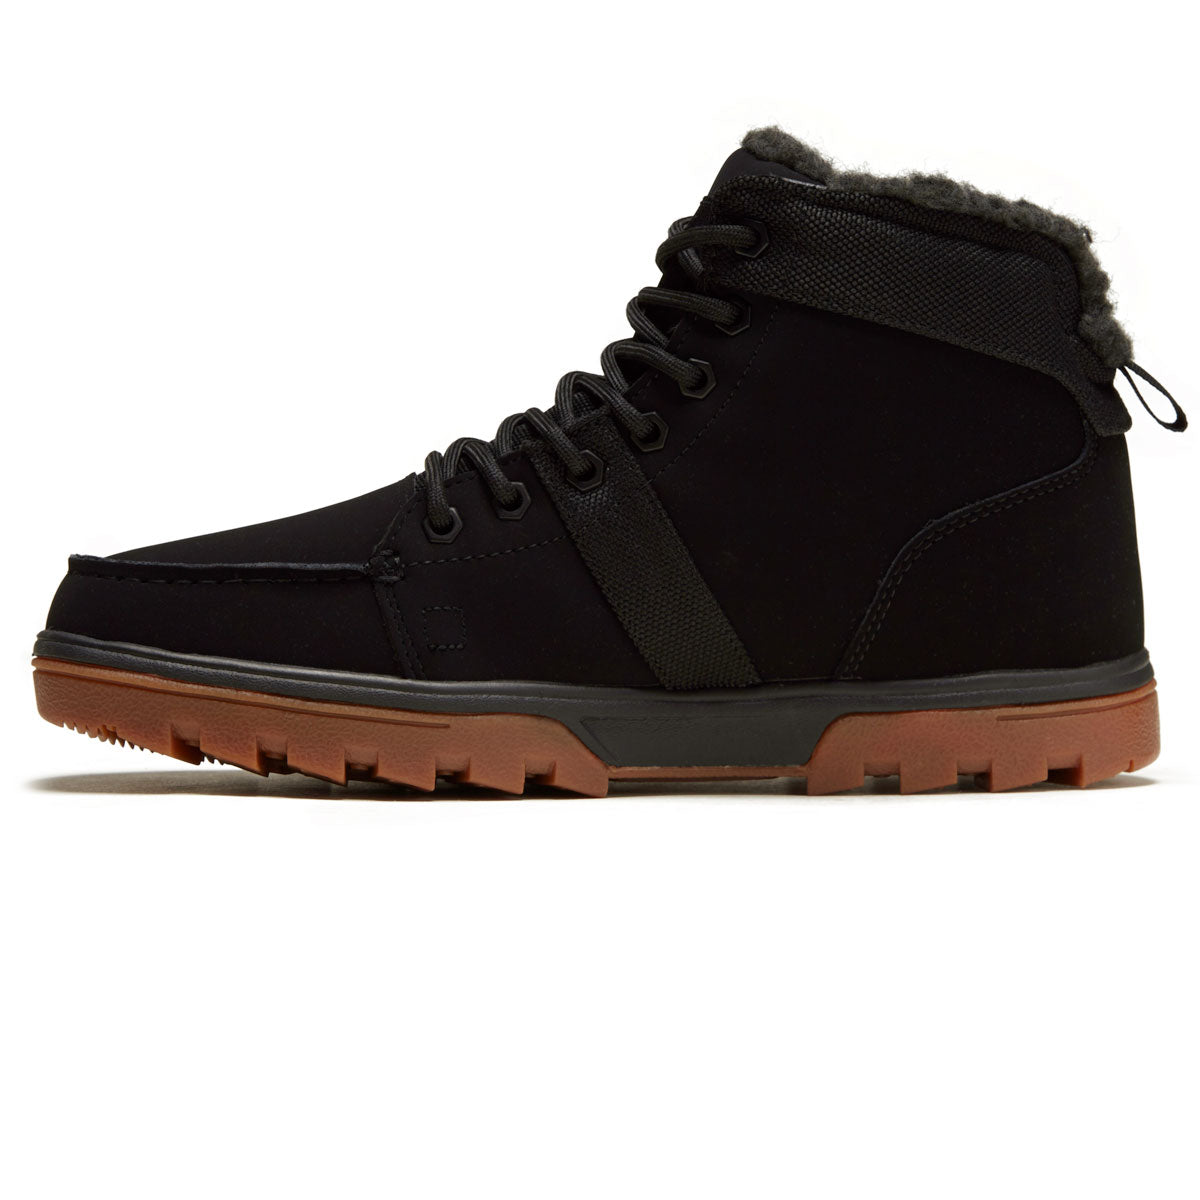 DC Woodland Winter Boots - Black/Gum image 2